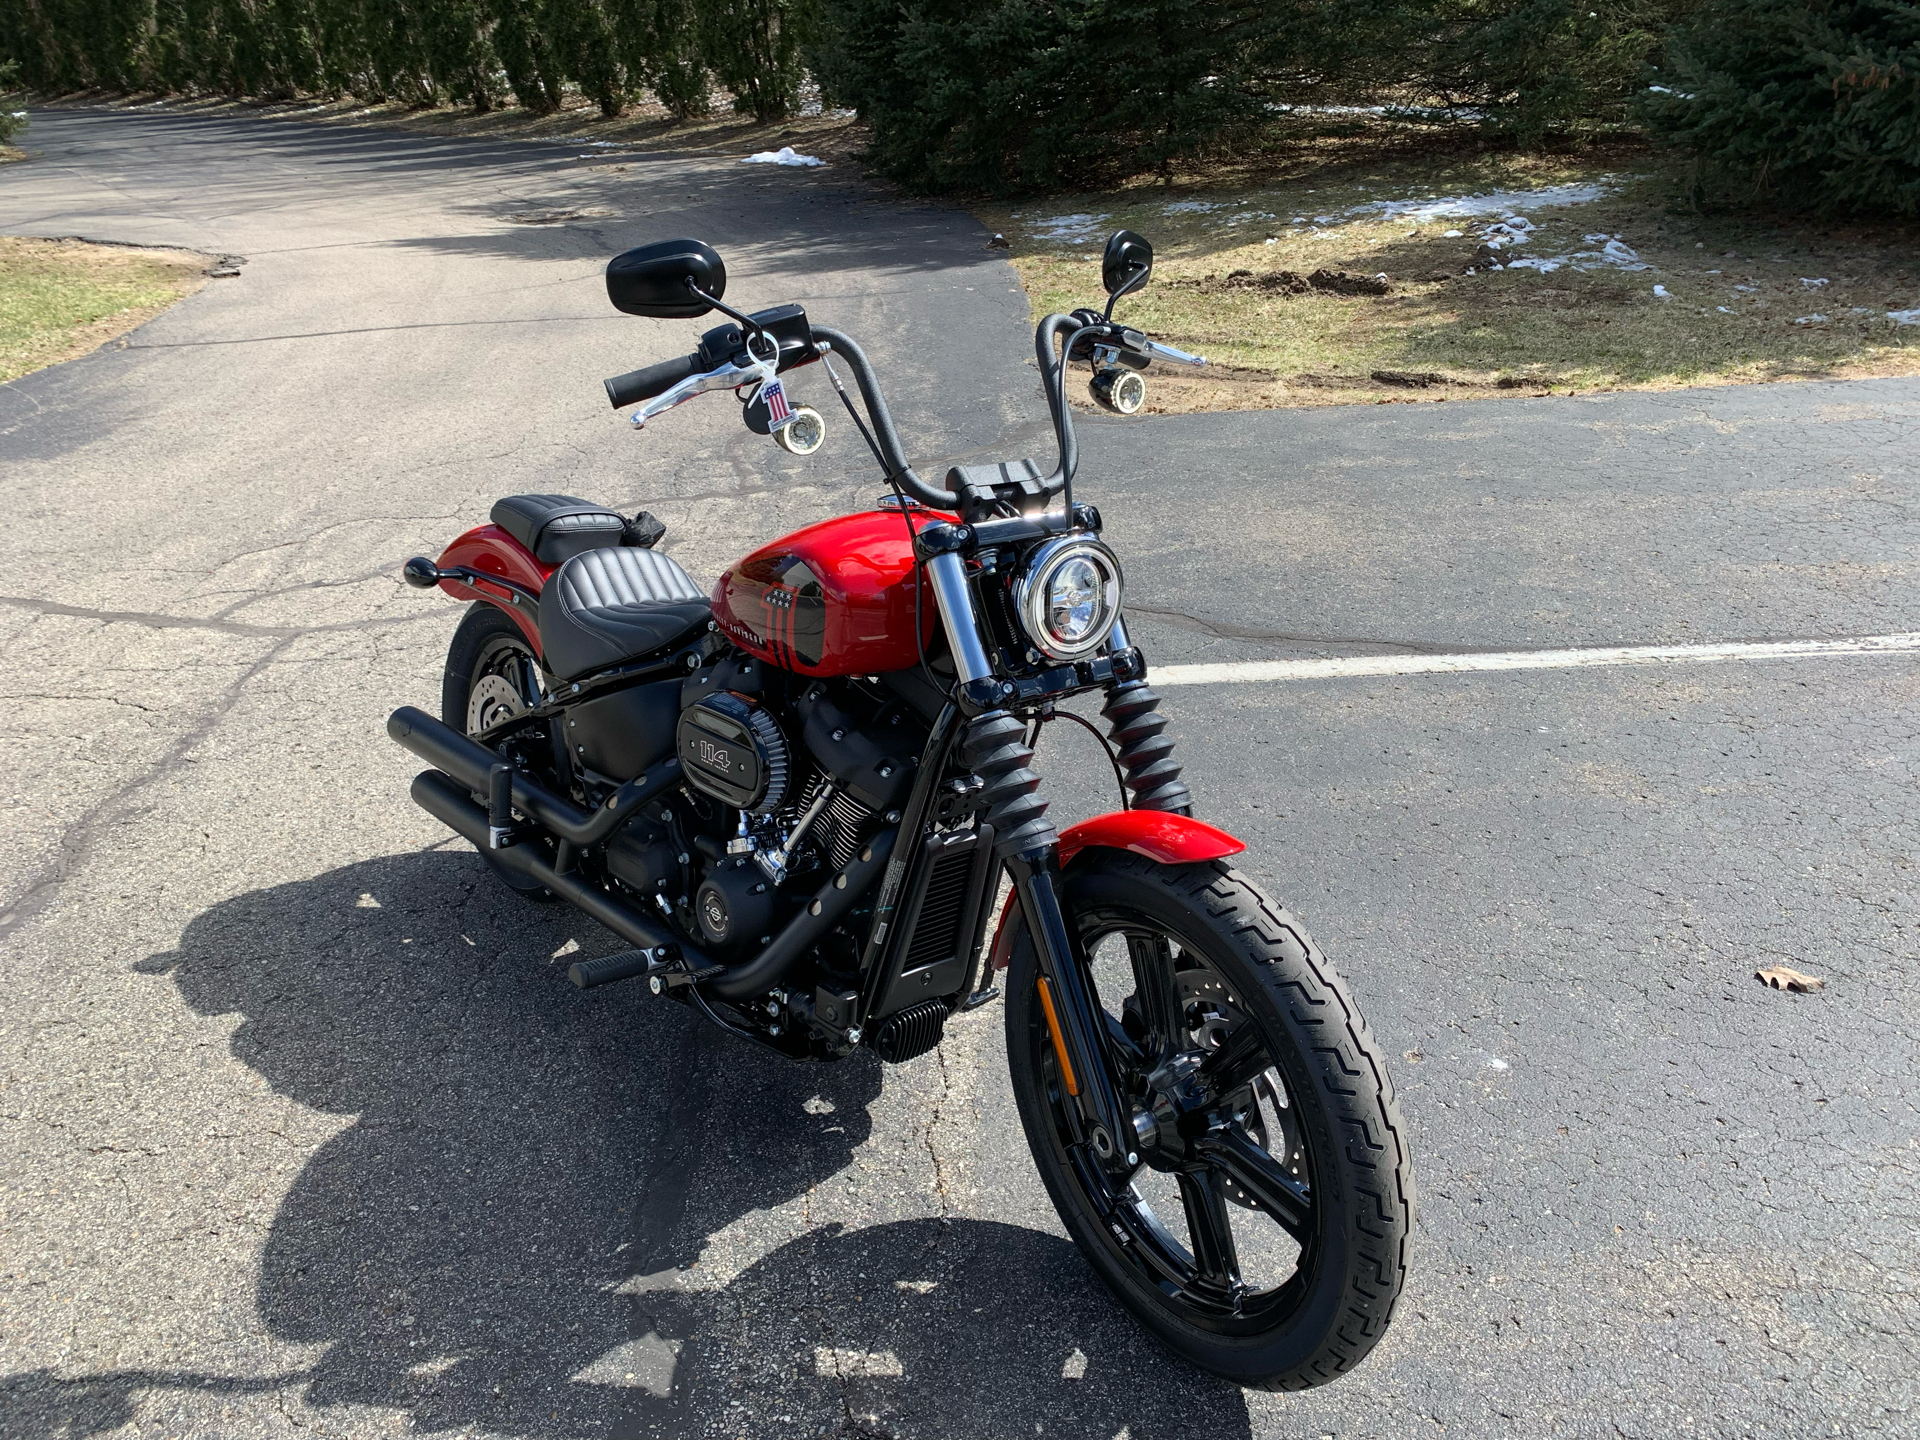 2022 Harley-Davidson Street Bob® 114 in Portage, Michigan - Photo 2